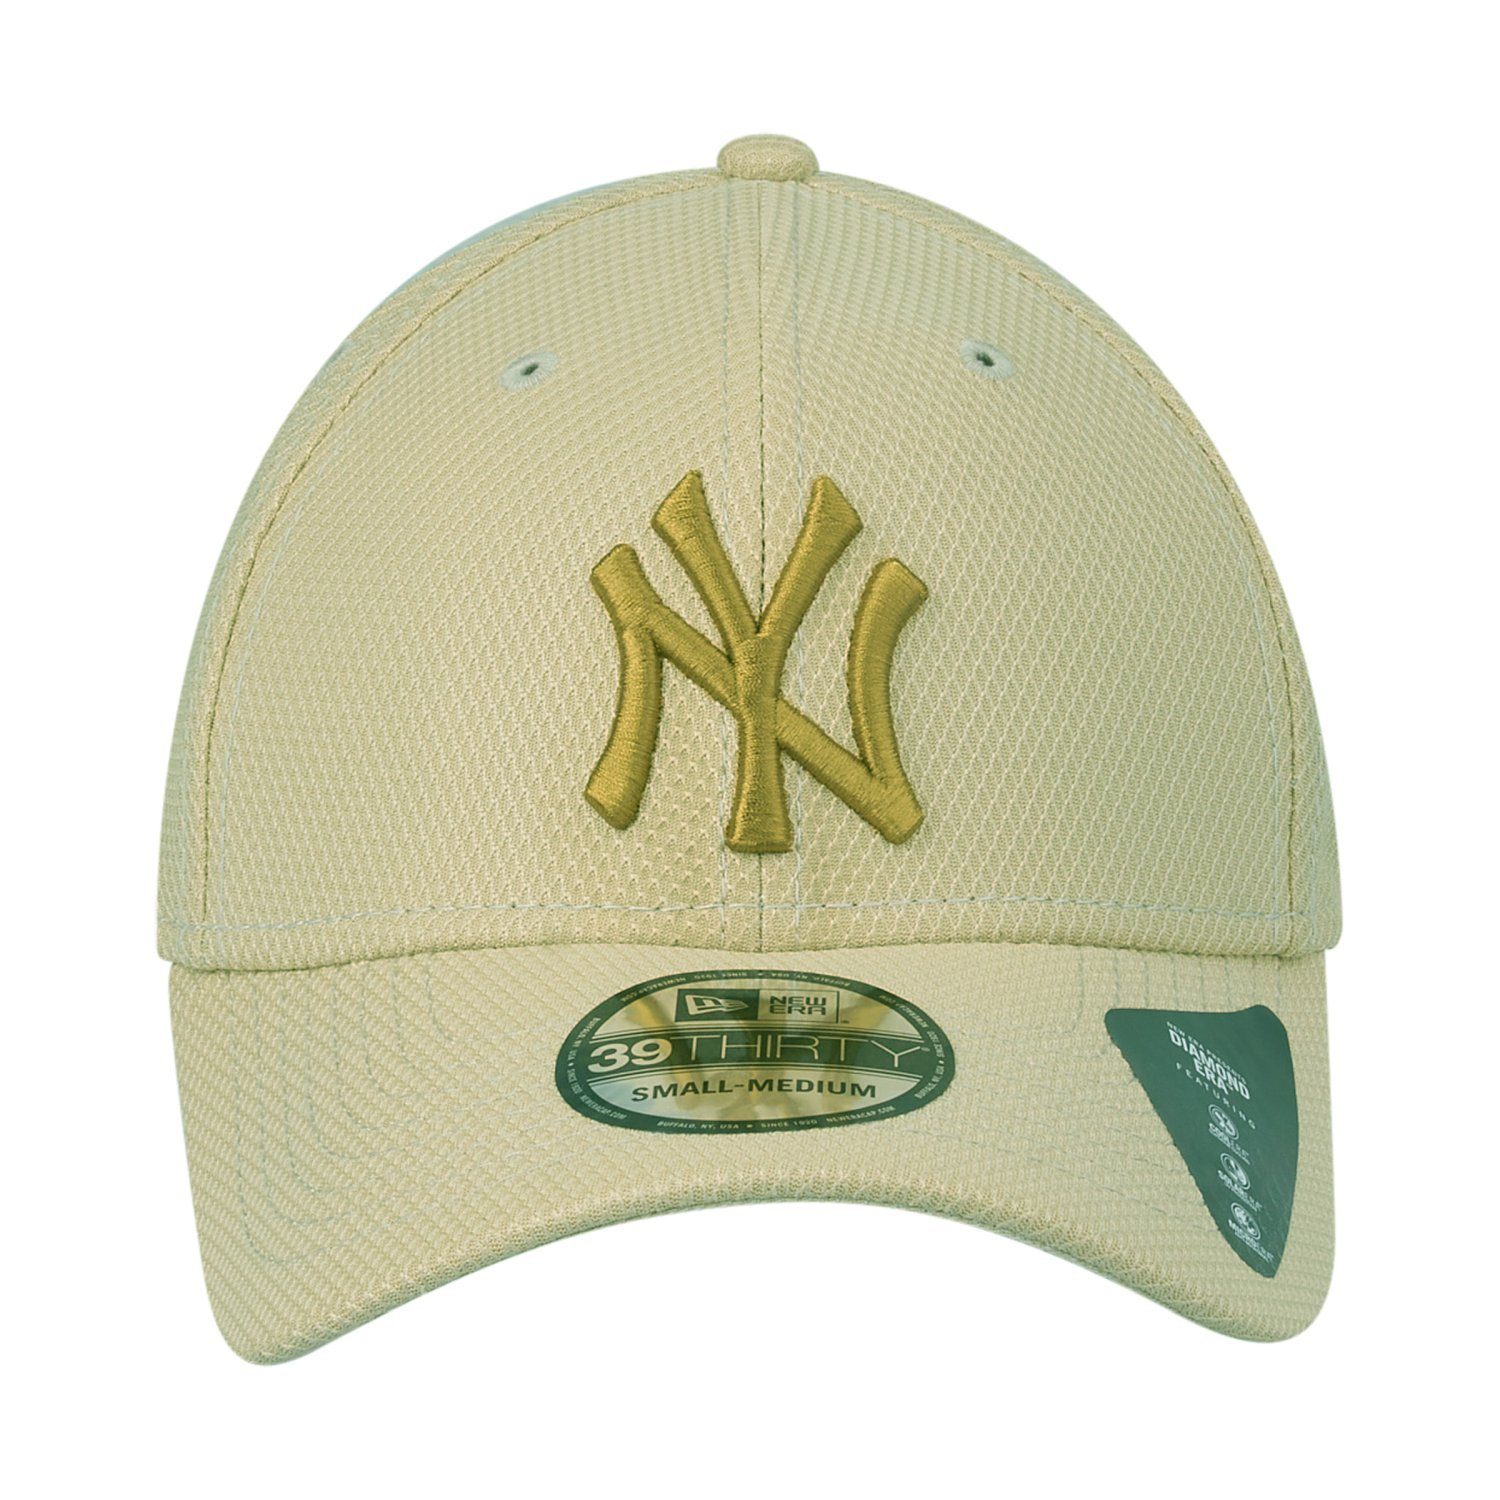 StretchFit Cap York Era DIAMOND 39Thirty Yankees Gold Flex New New